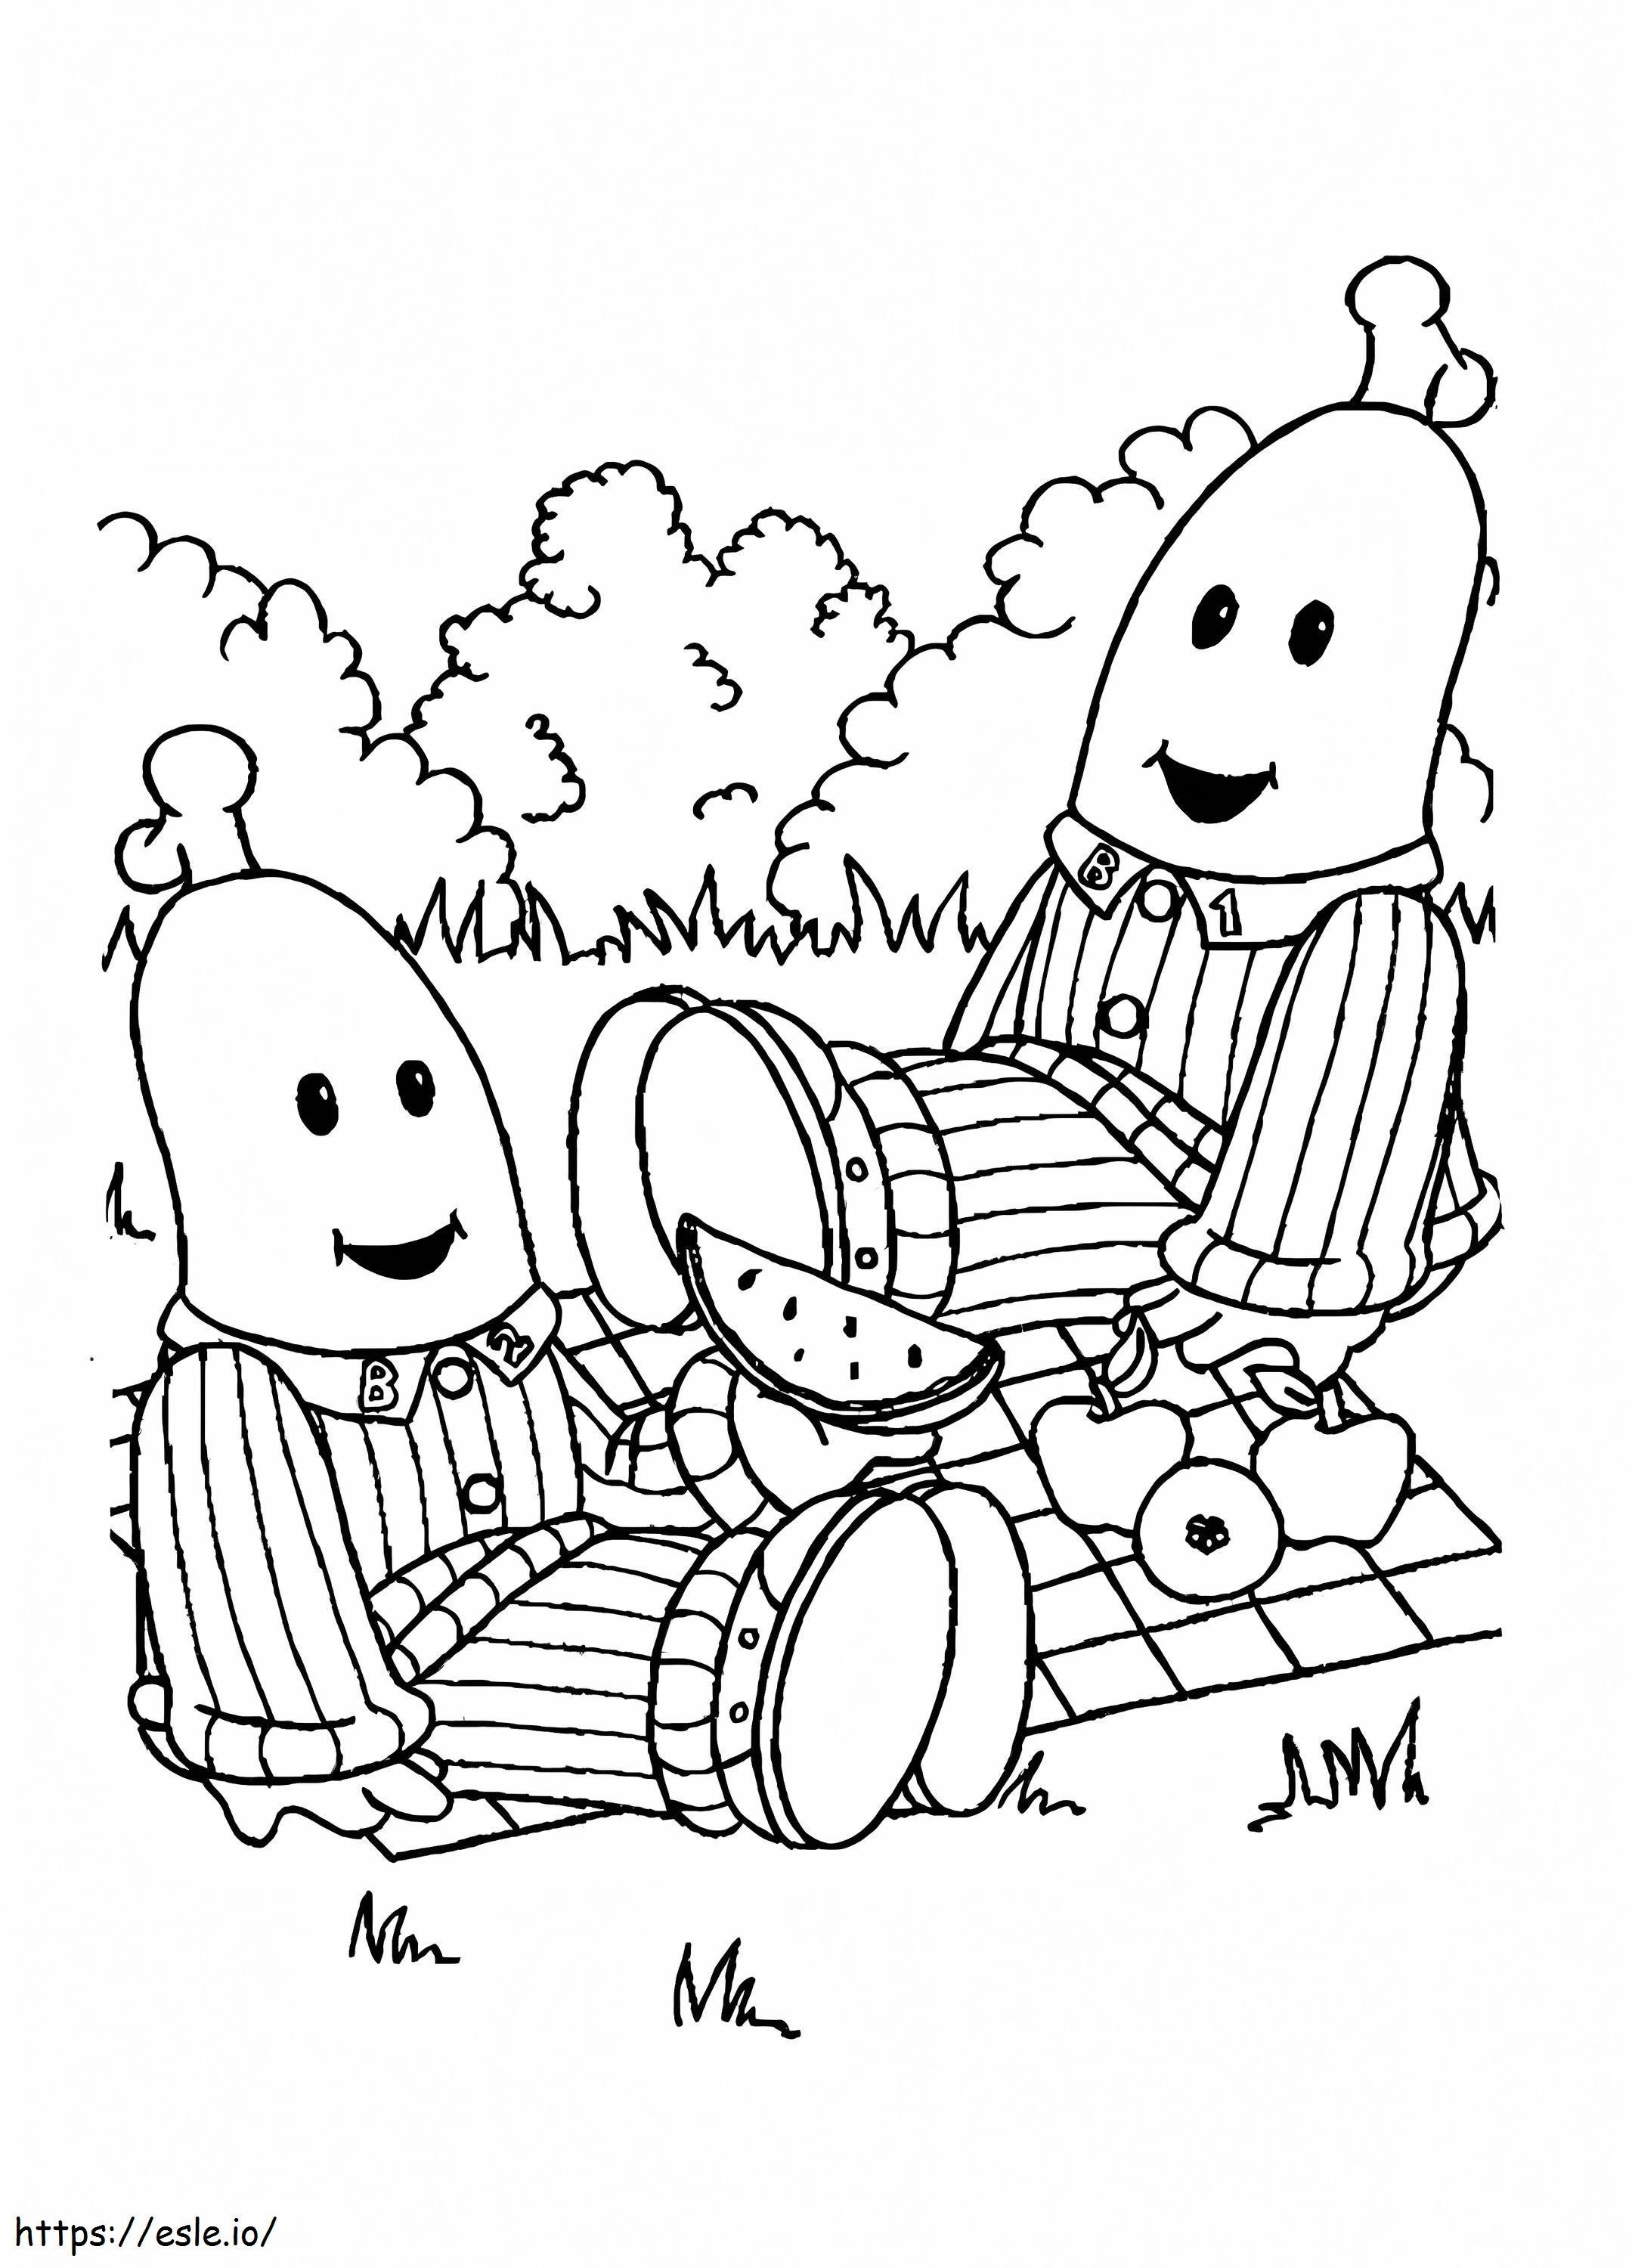 Bananas In Pyjamas 4 coloring page